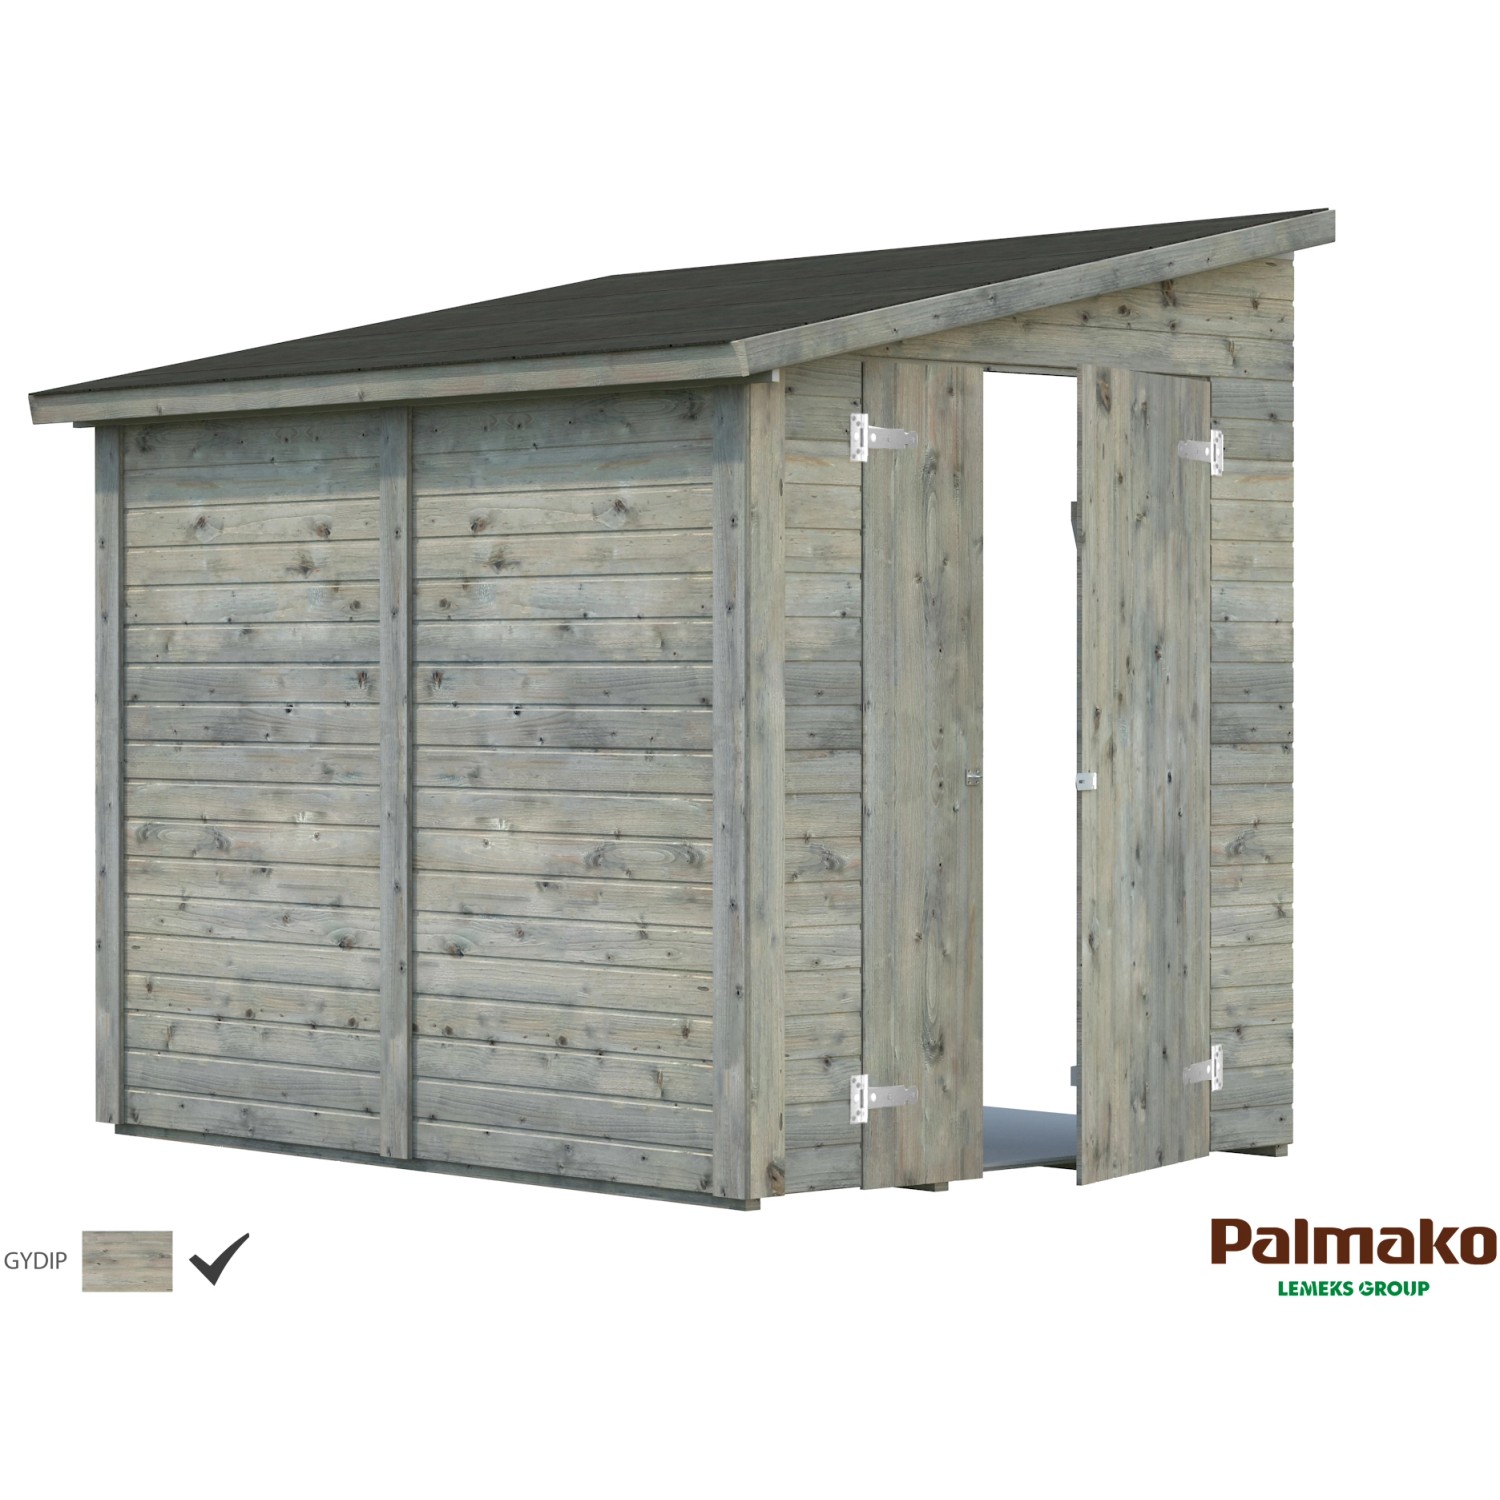 Palmako Mia Holz-Gartenhaus Grau Pultdach Tauchgrundiert 222 cm x 165 cm von Palmako